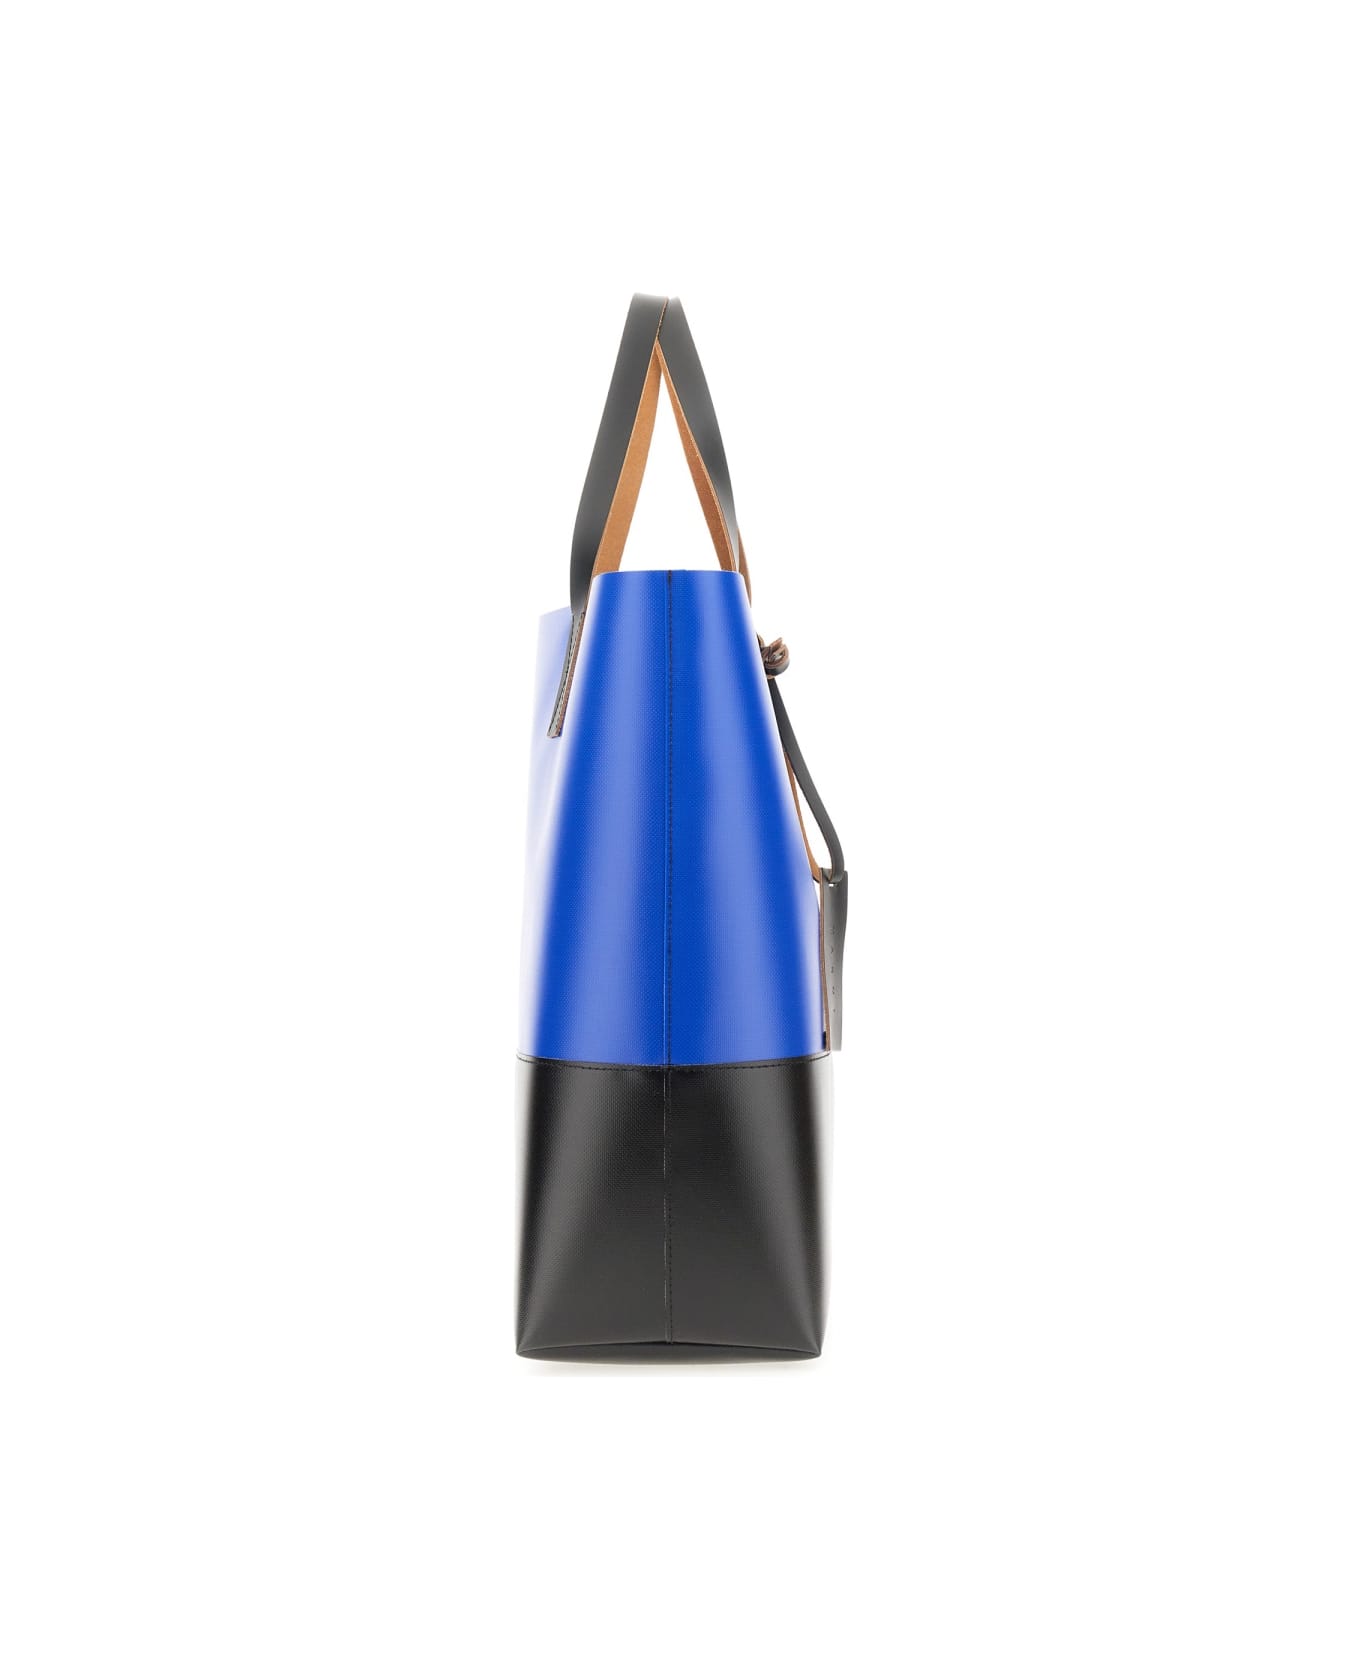 Marni Tribeca Shopper Bag - BLUE トートバッグ